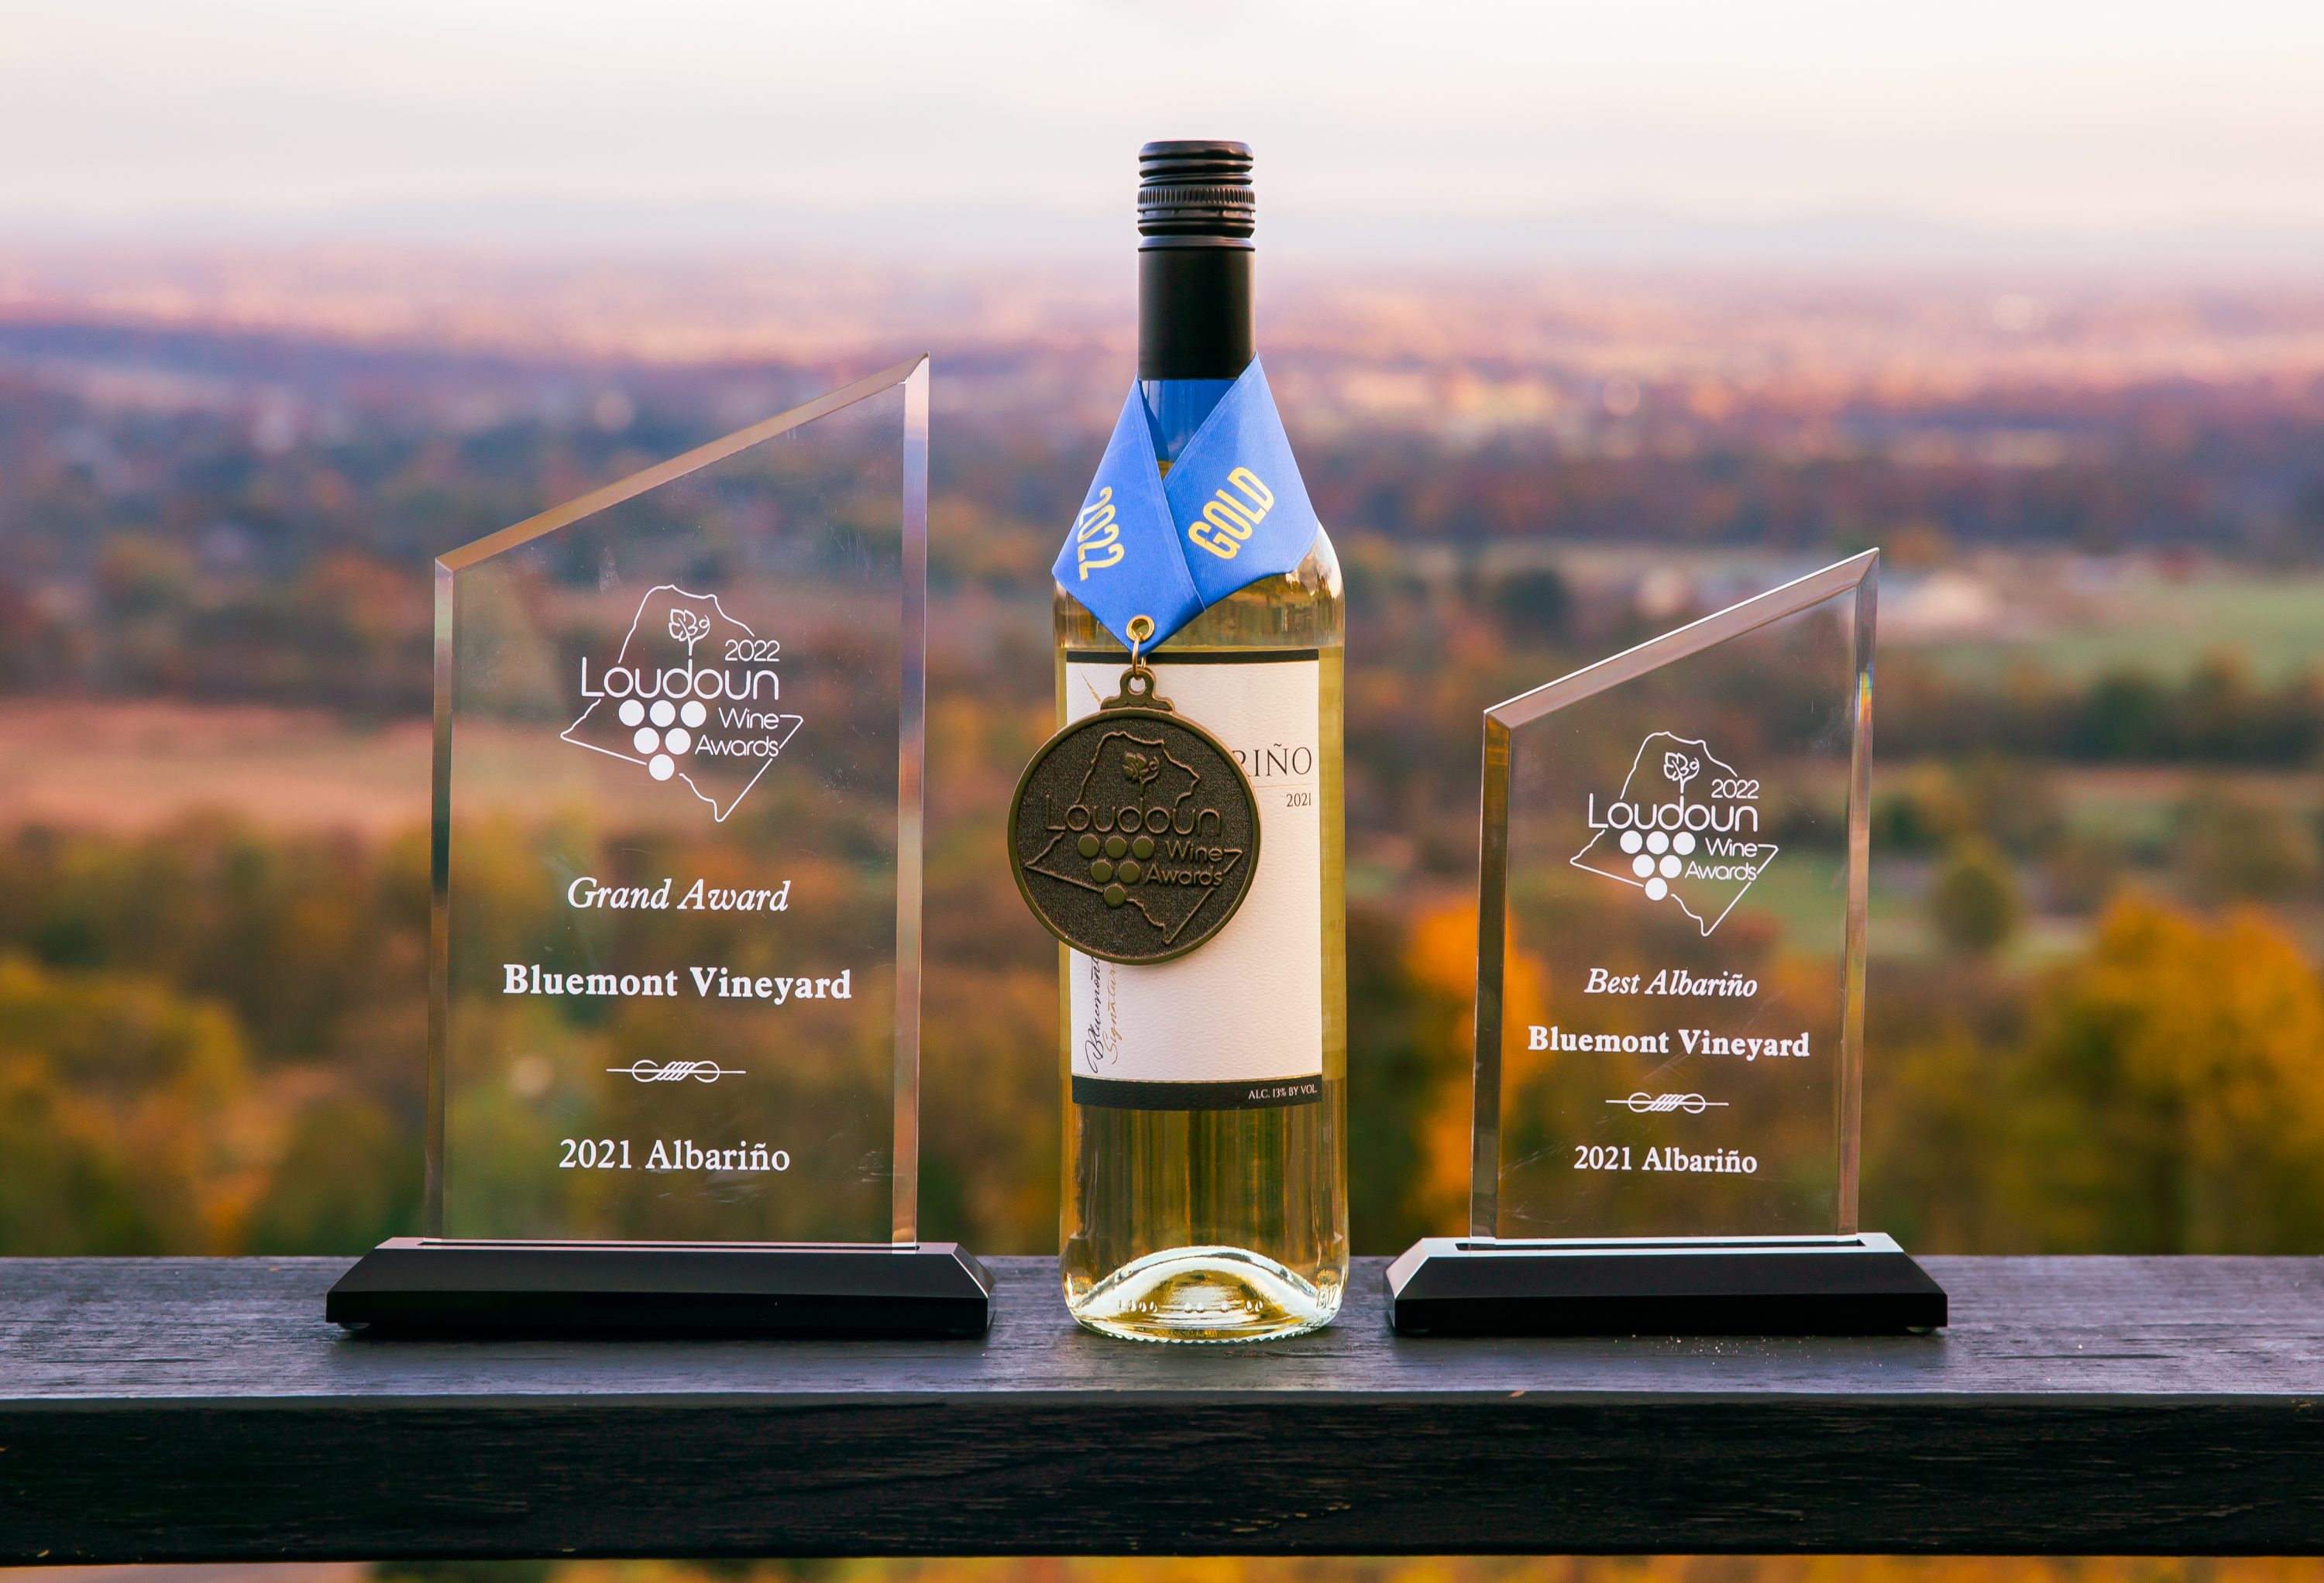 Bluemont Vineyard 2021 Albariño, award winning wine